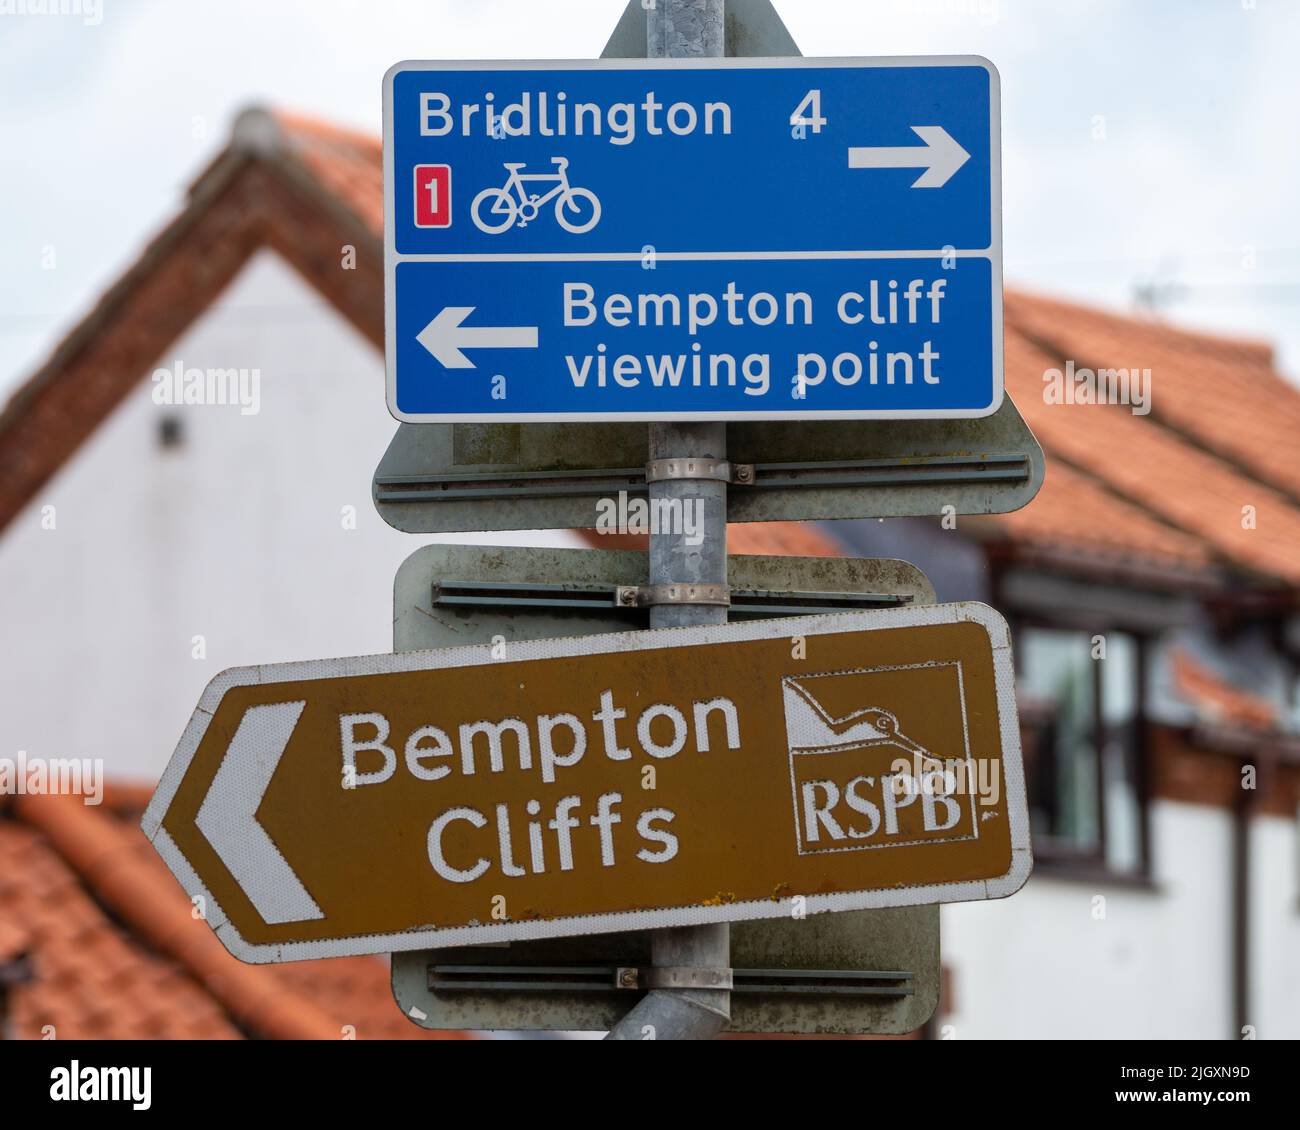 Señalización para Bridlington, RSPB Bempton Cliffs y National Cycle Route 1, Inglaterra, Reino Unido Foto de stock